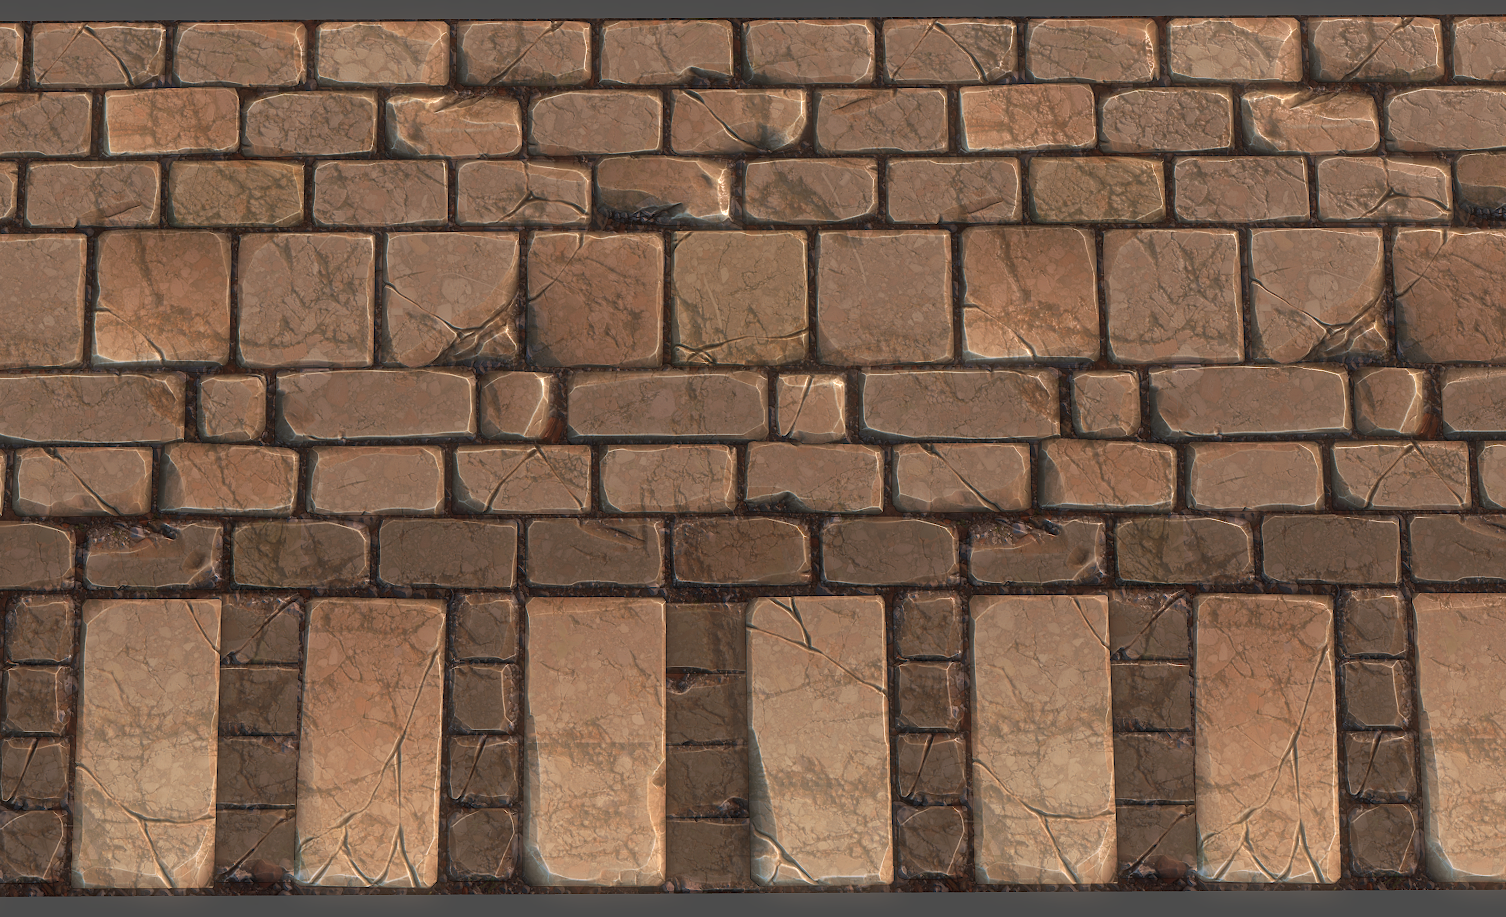 tiling_brick_wall_texture_by_julionicoletti-d6zwsox.png